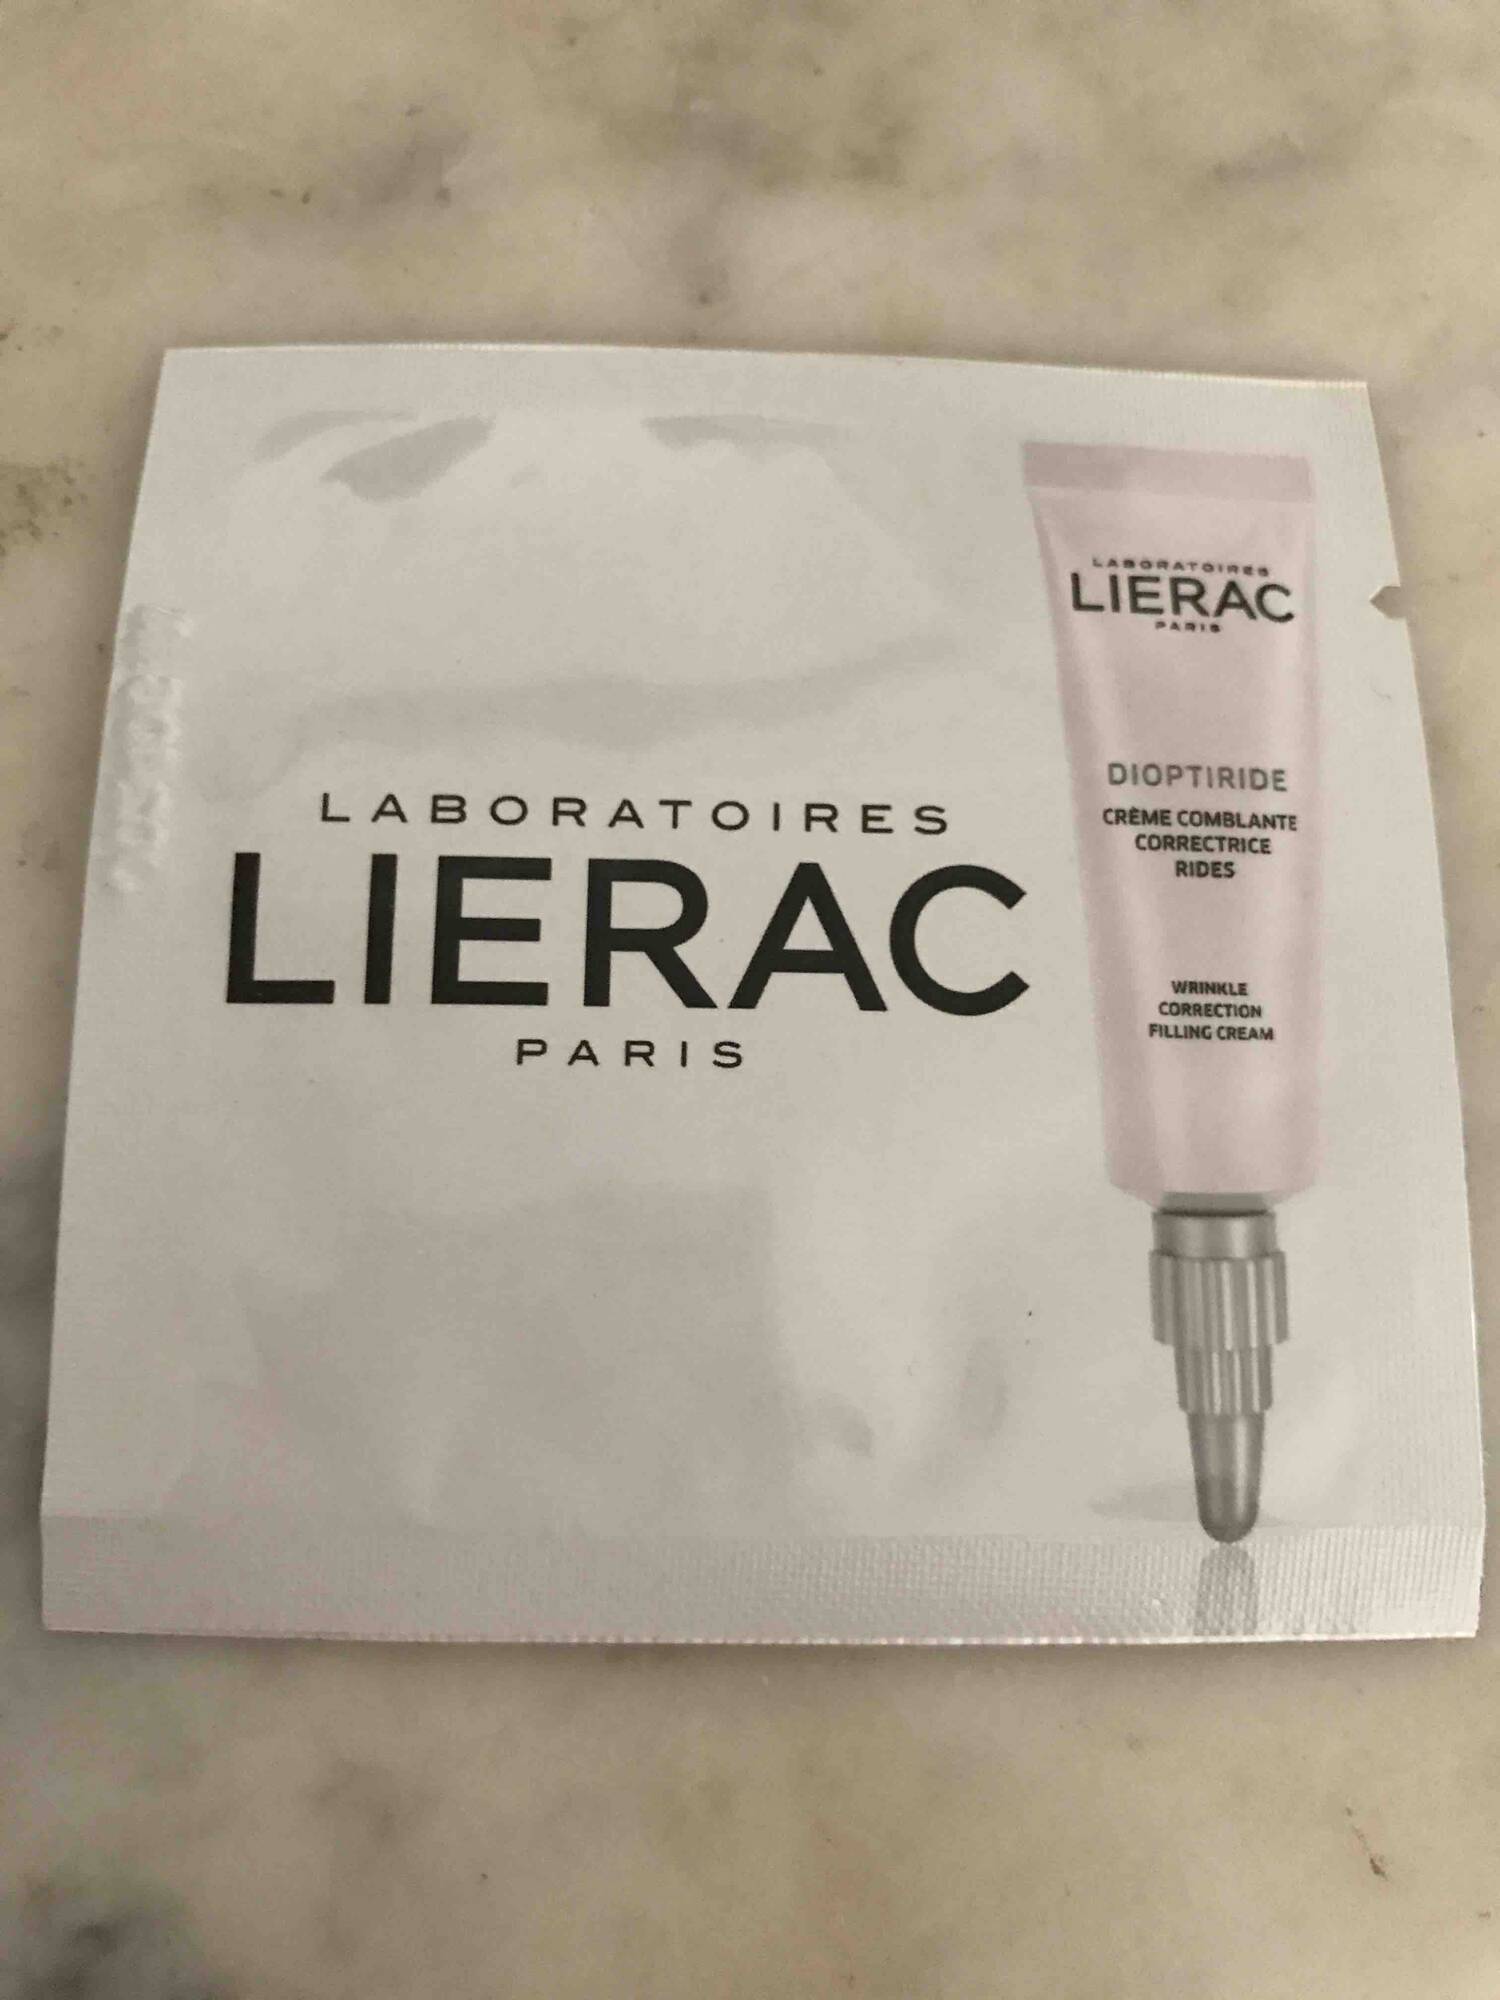 LIÉRAC - Dioptiride - Crème comblante correctrice rides